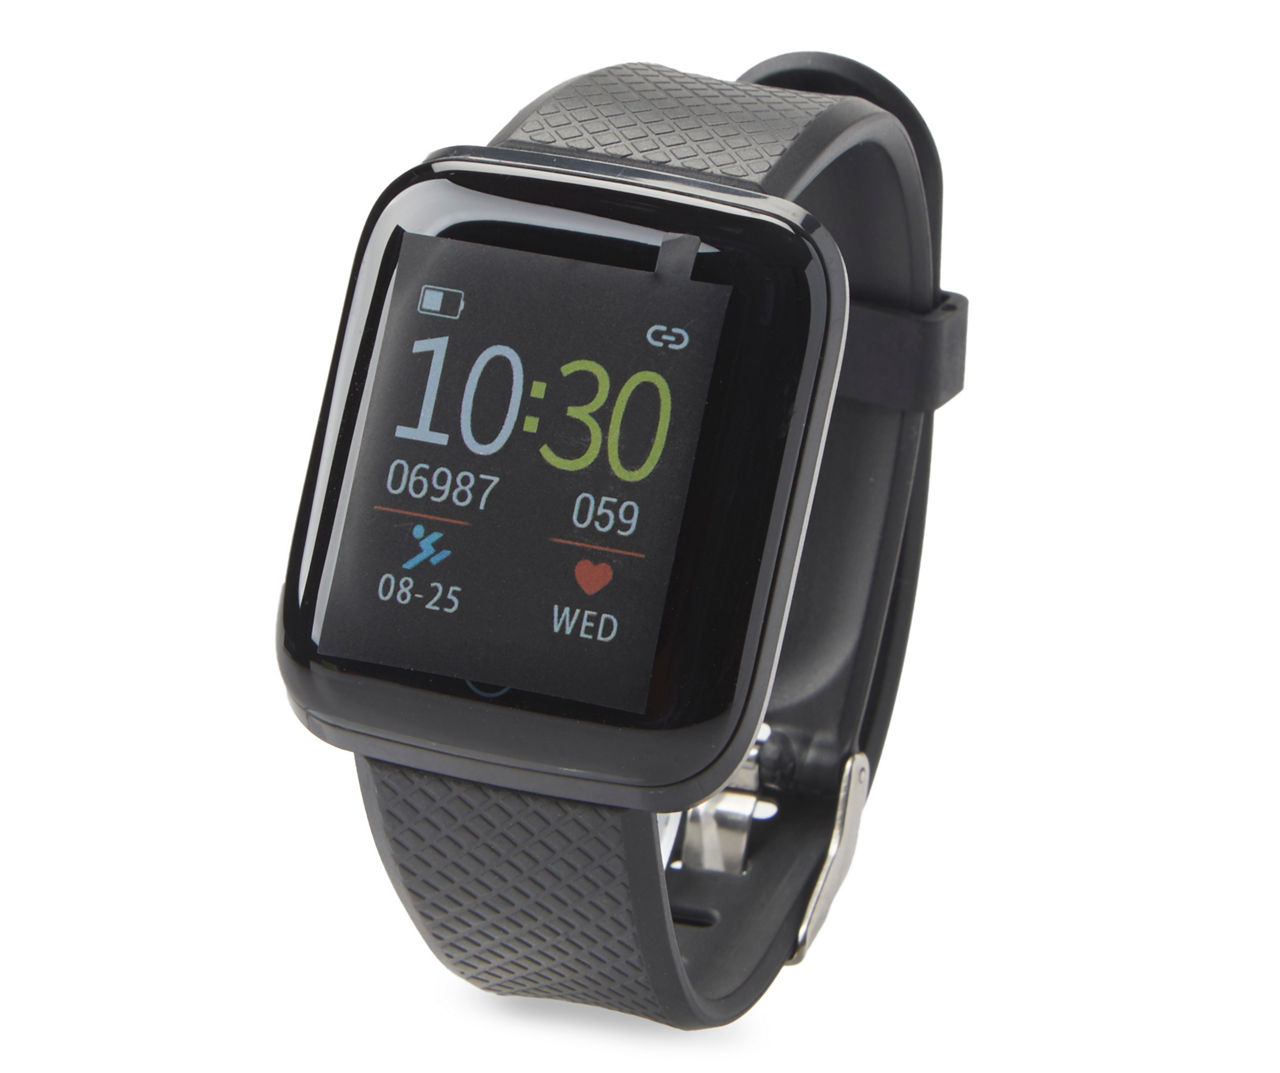 Vivitar Bluetooth Smart Watch